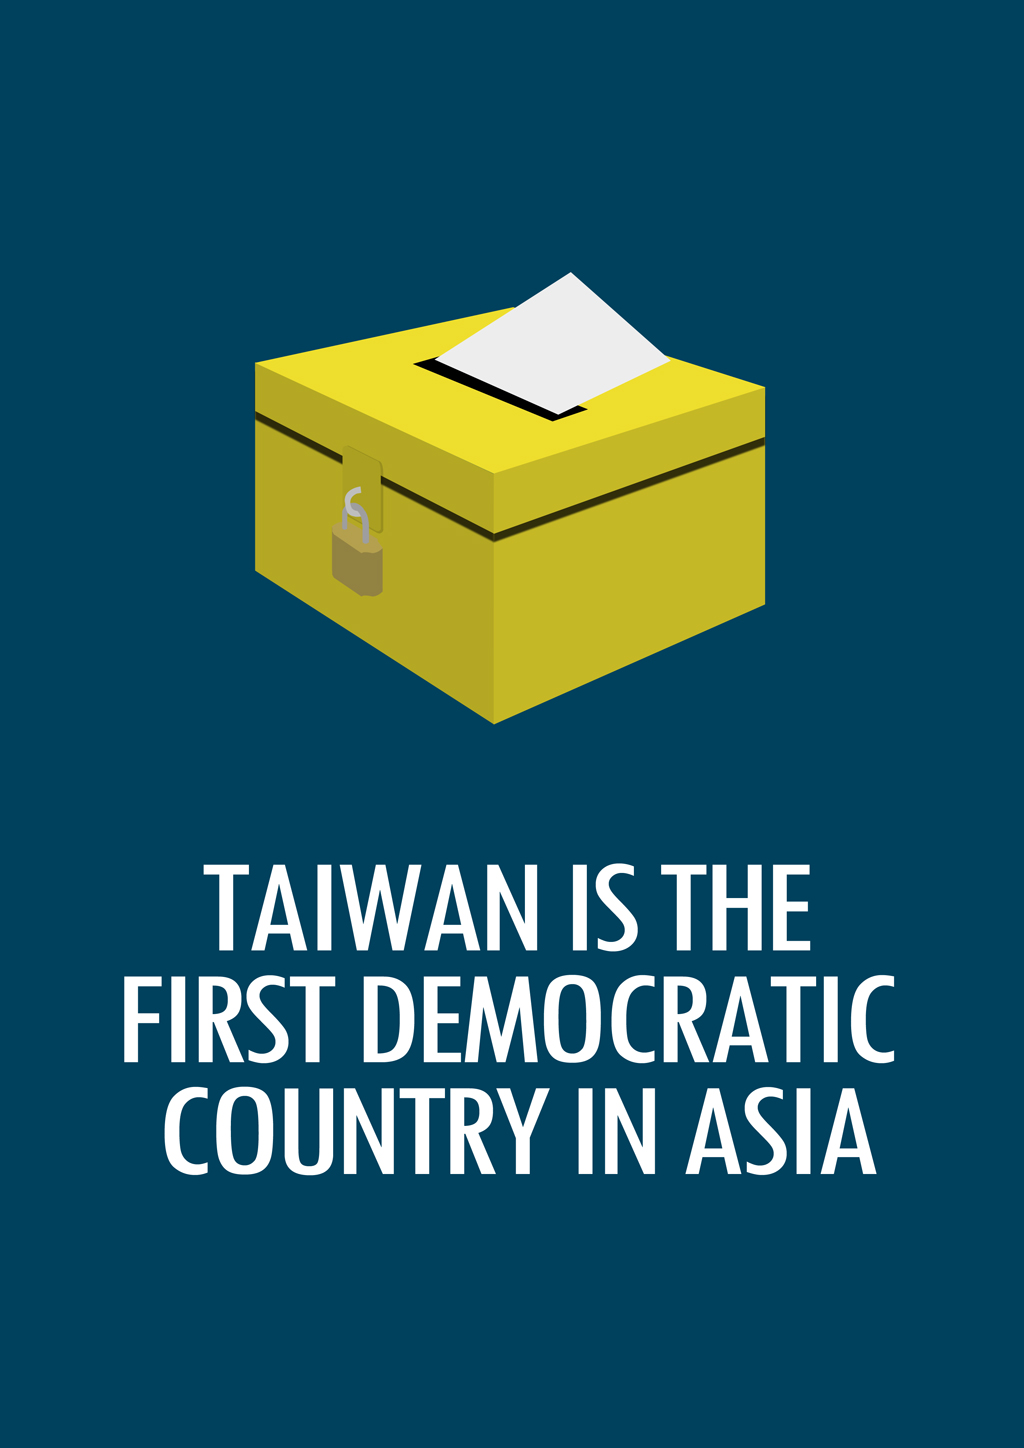 Taiwan First Democracy in Asia